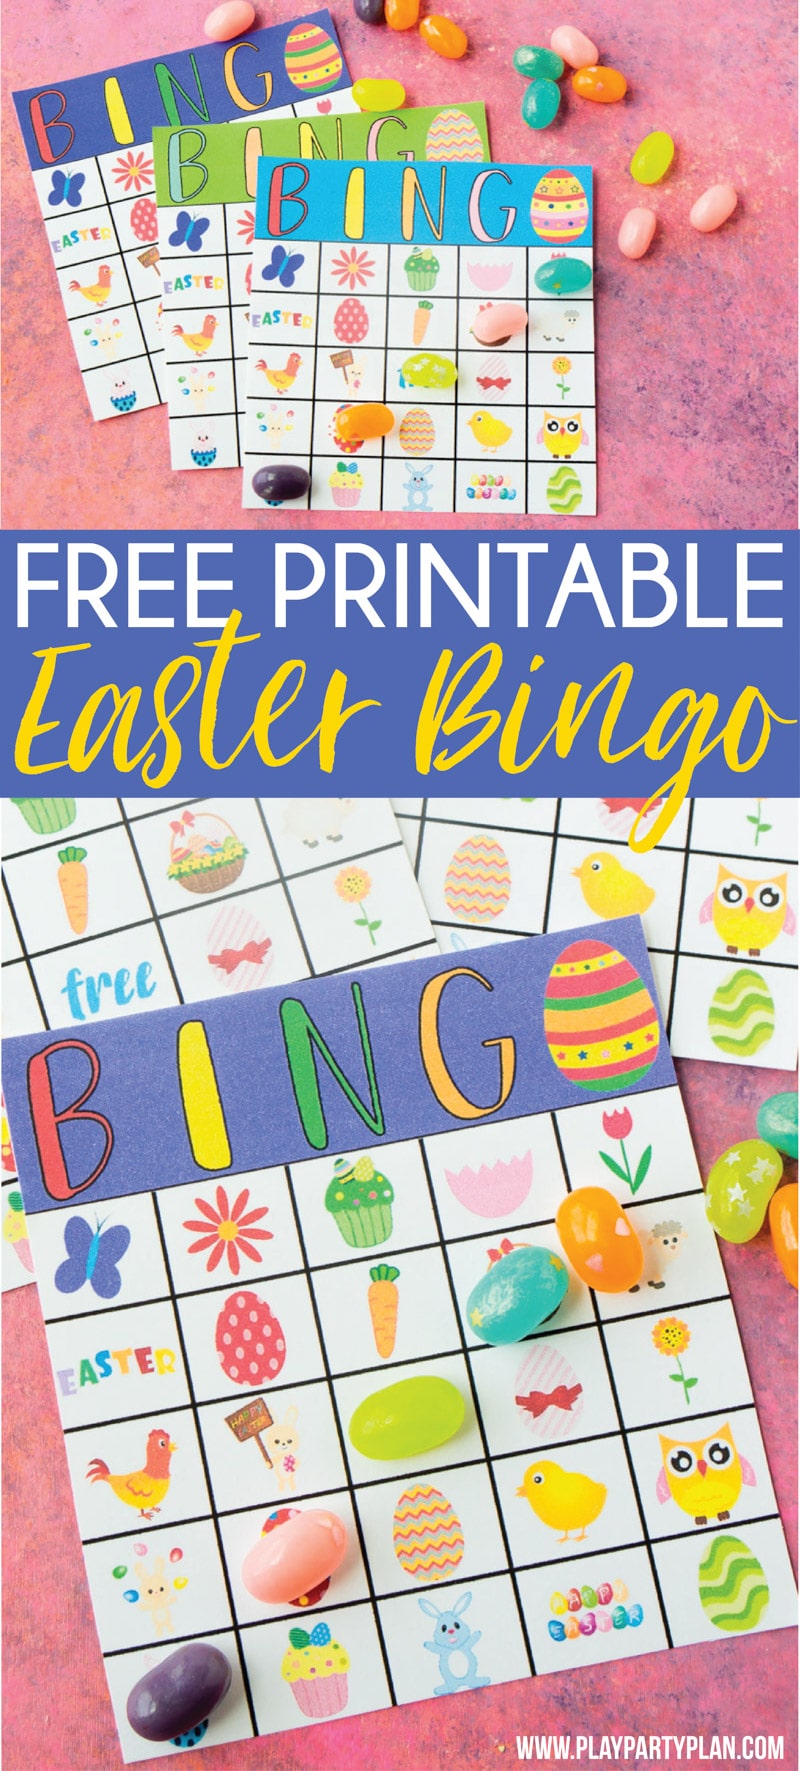 Ideas for bingo prizes for kids